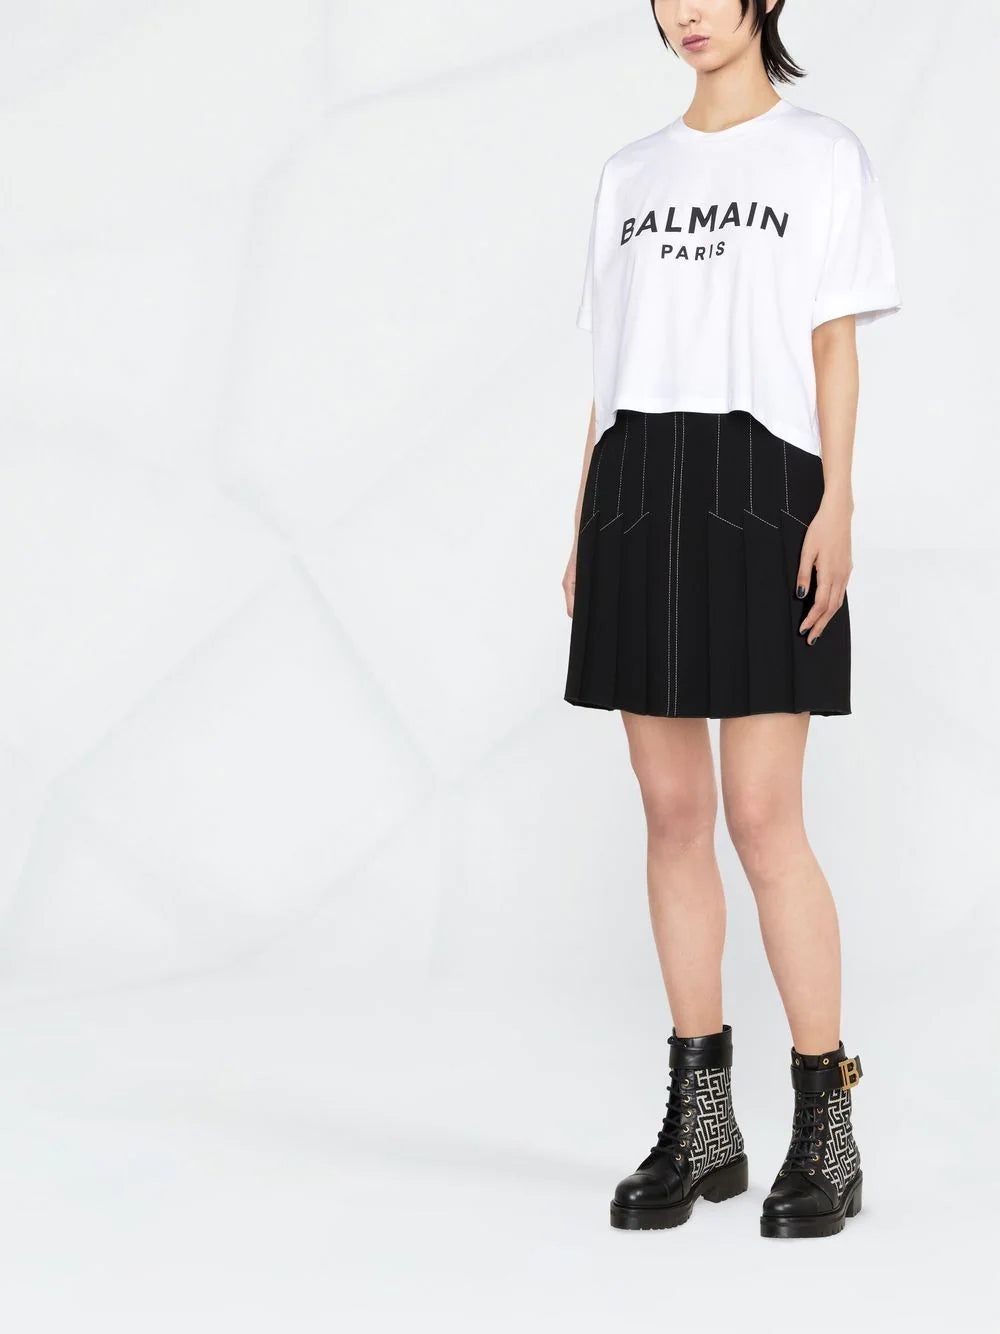 Balmain Printed Cropped T-Shirt - 2